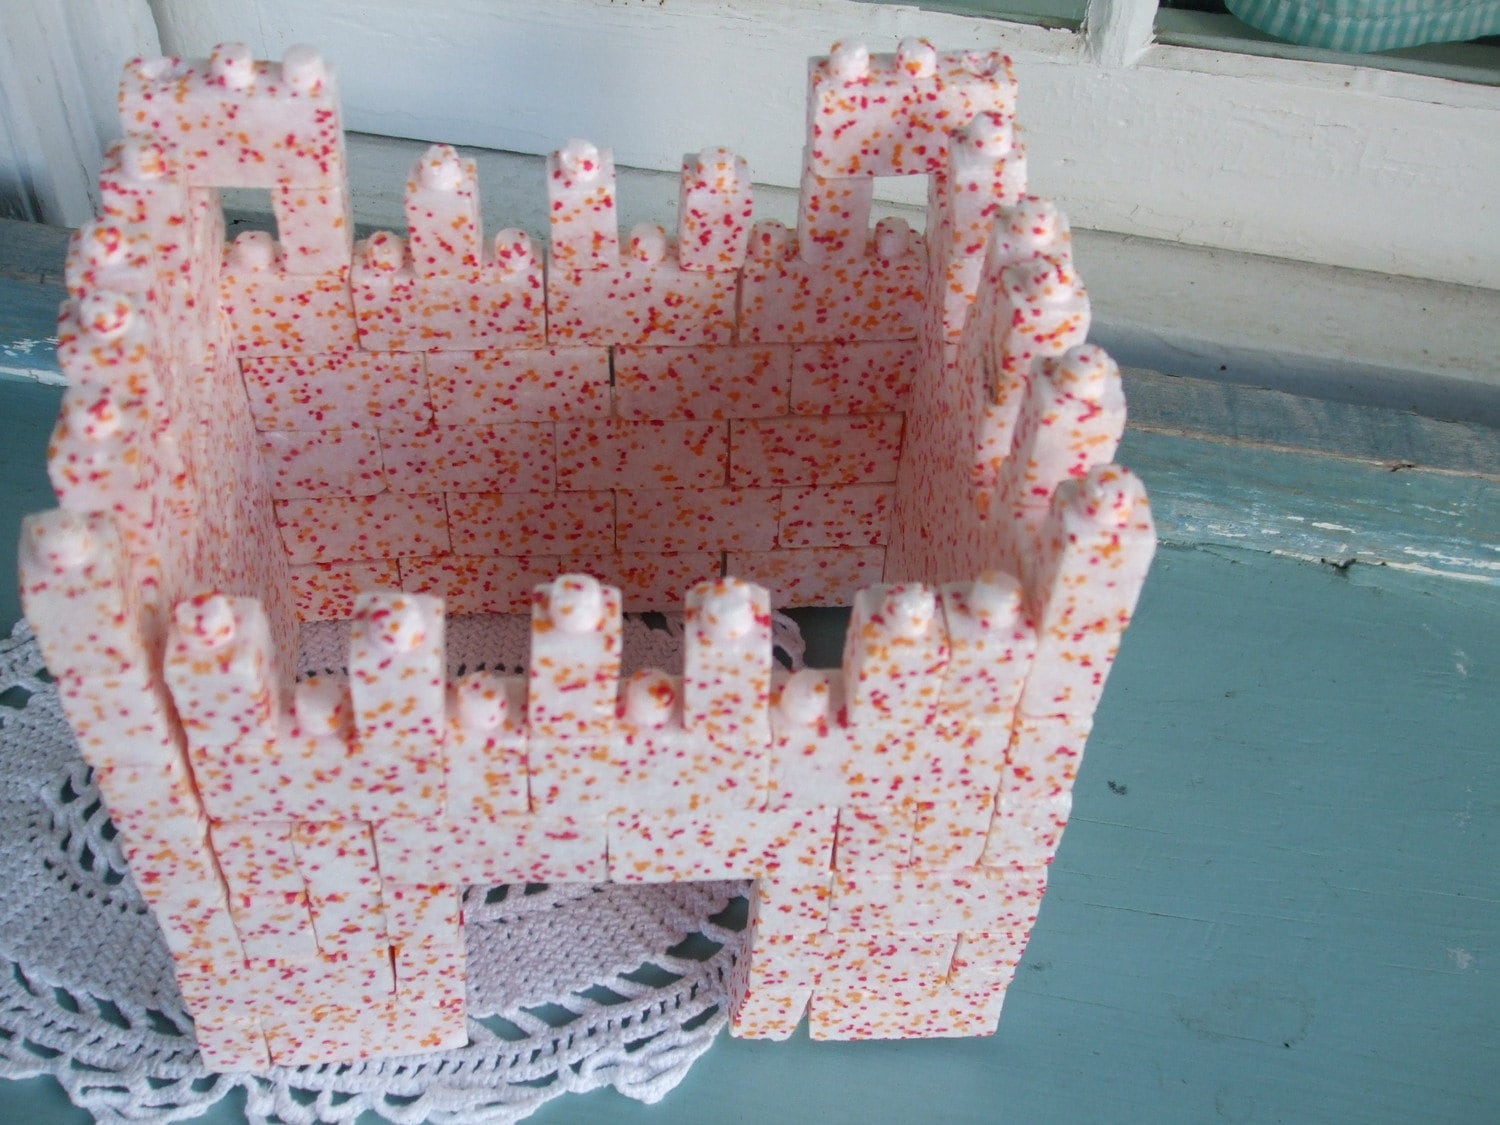 Building With Styrofoam